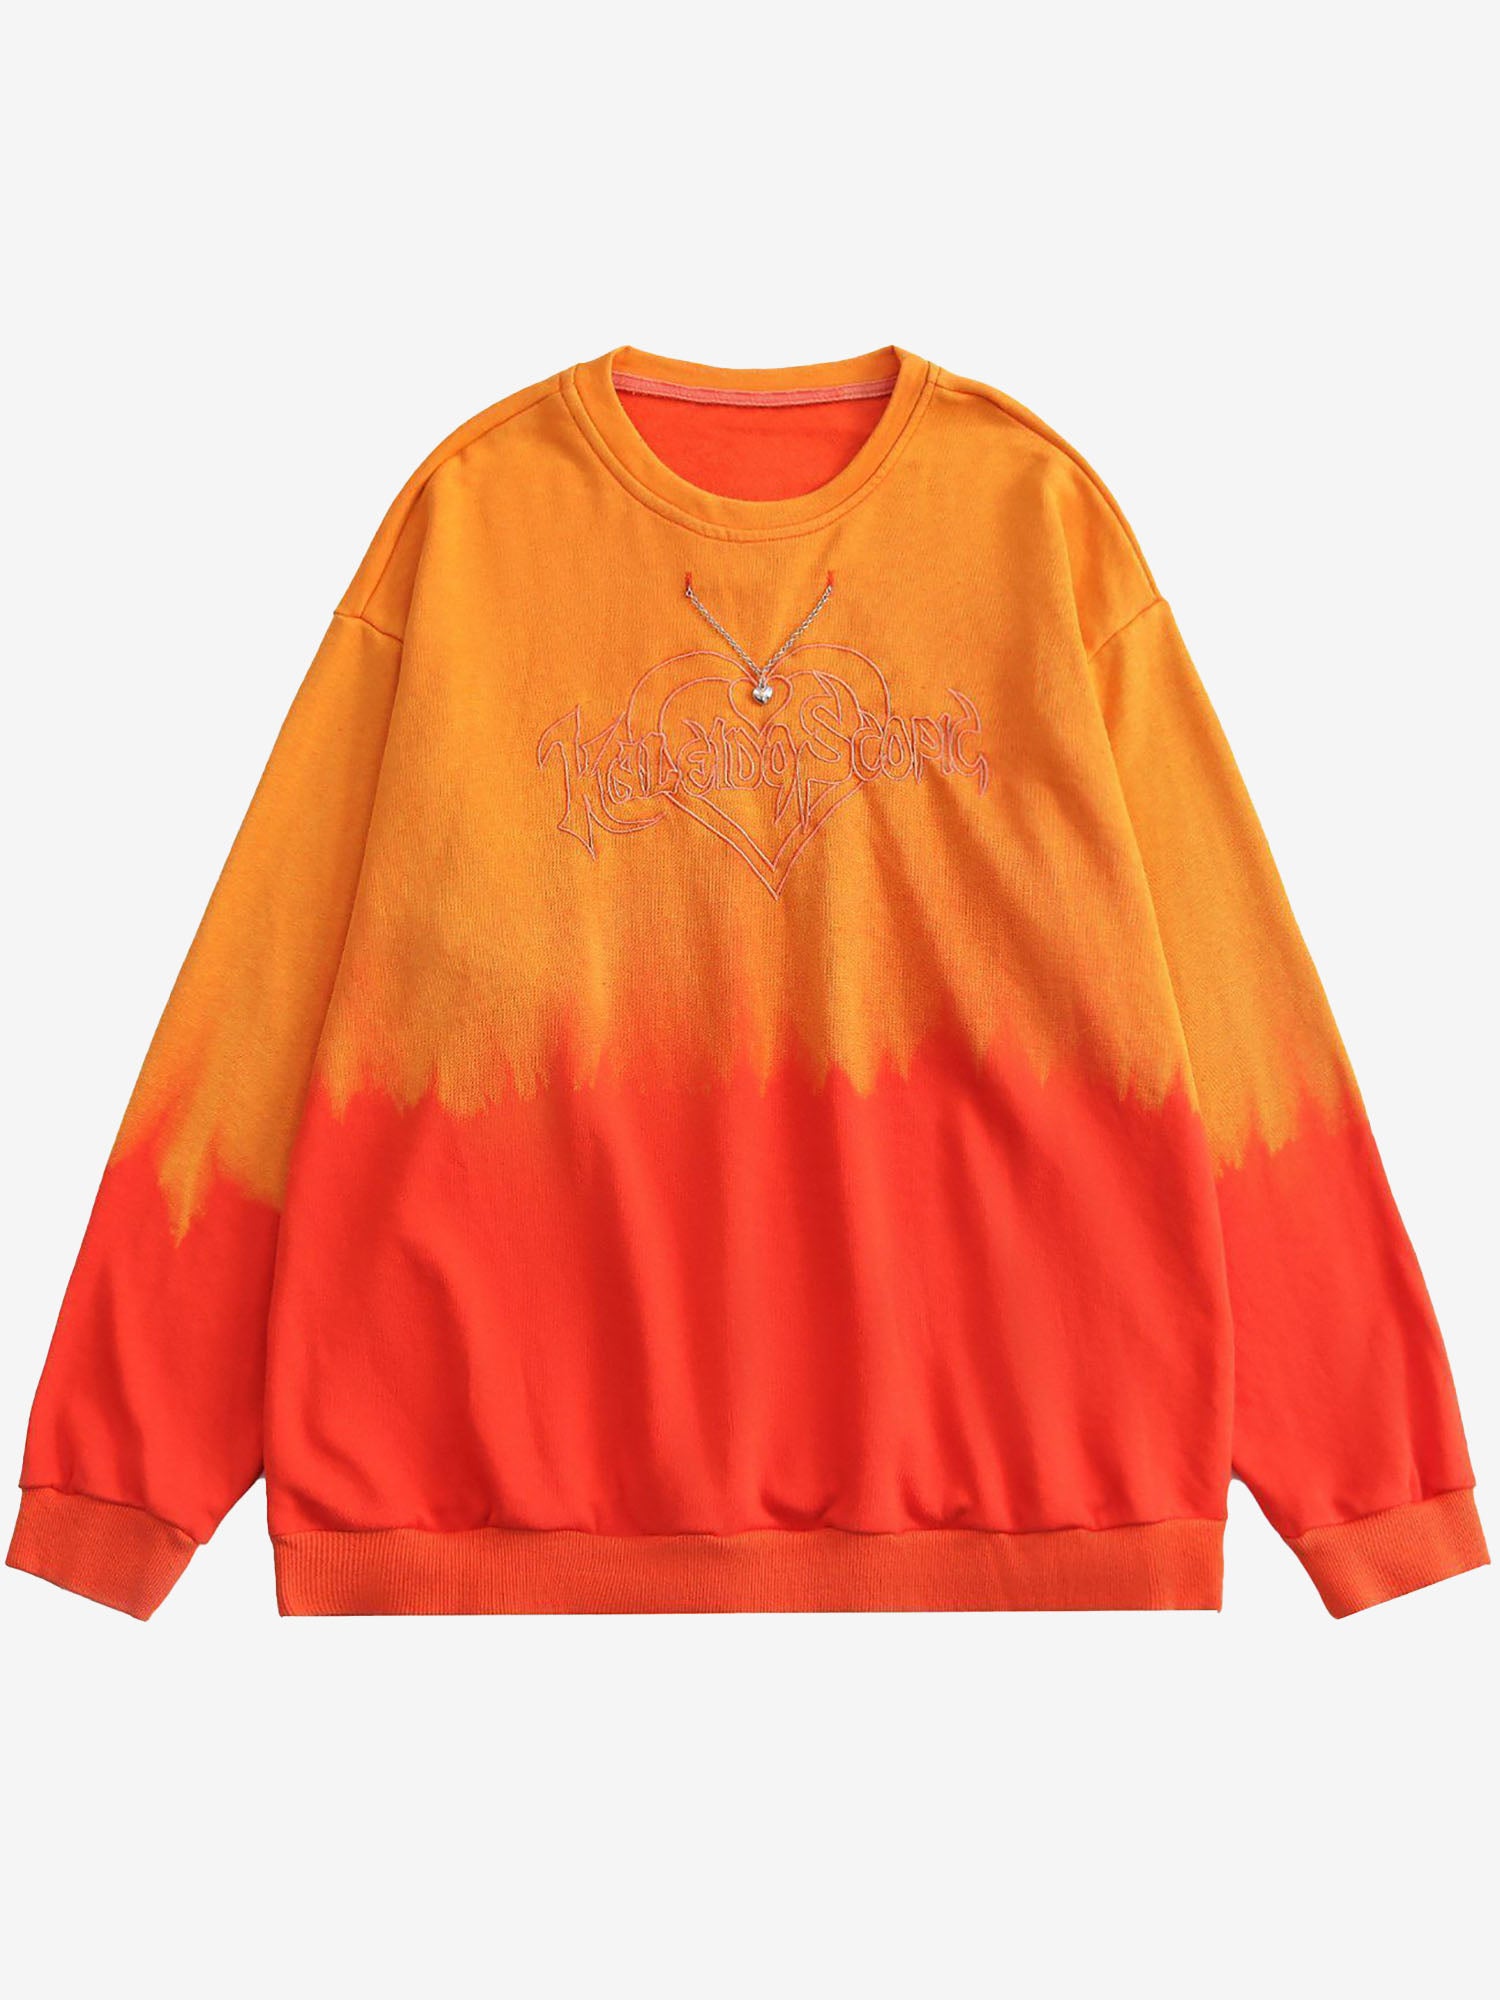 JUSTNOTAG Gradient Embroidery Heart Chain Sweatshirt